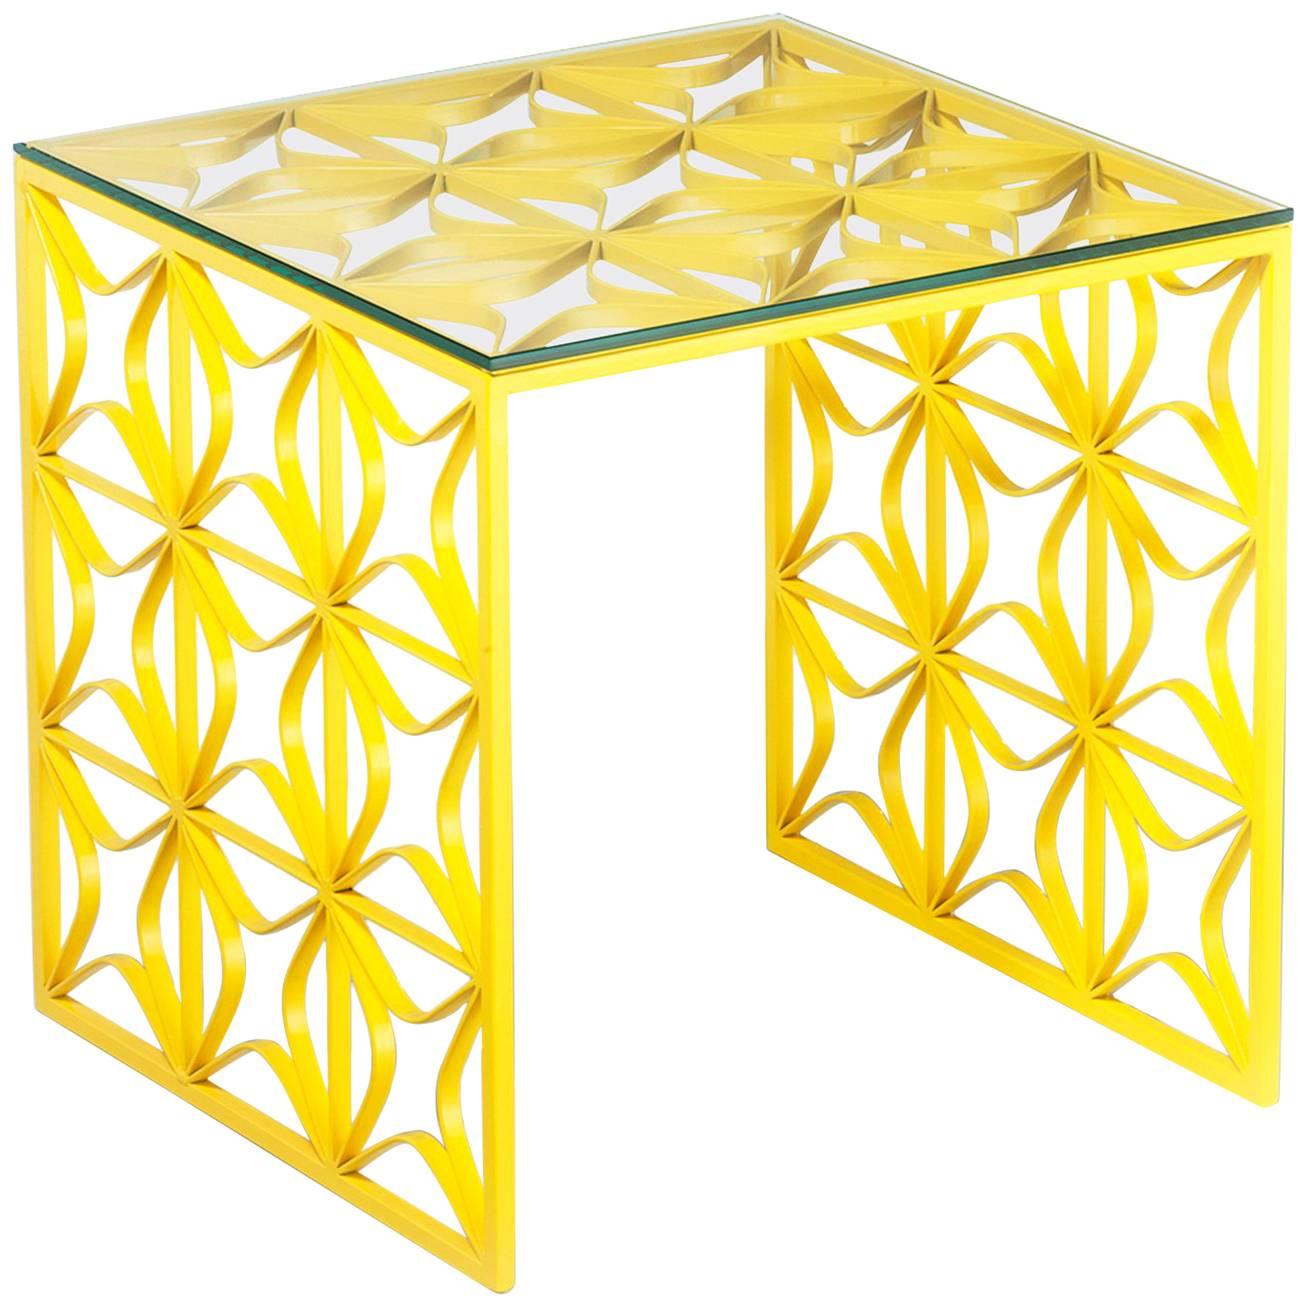 São Cristóvão Brazilian Contemporary Graphic Pattern Cut Metal and Side Table